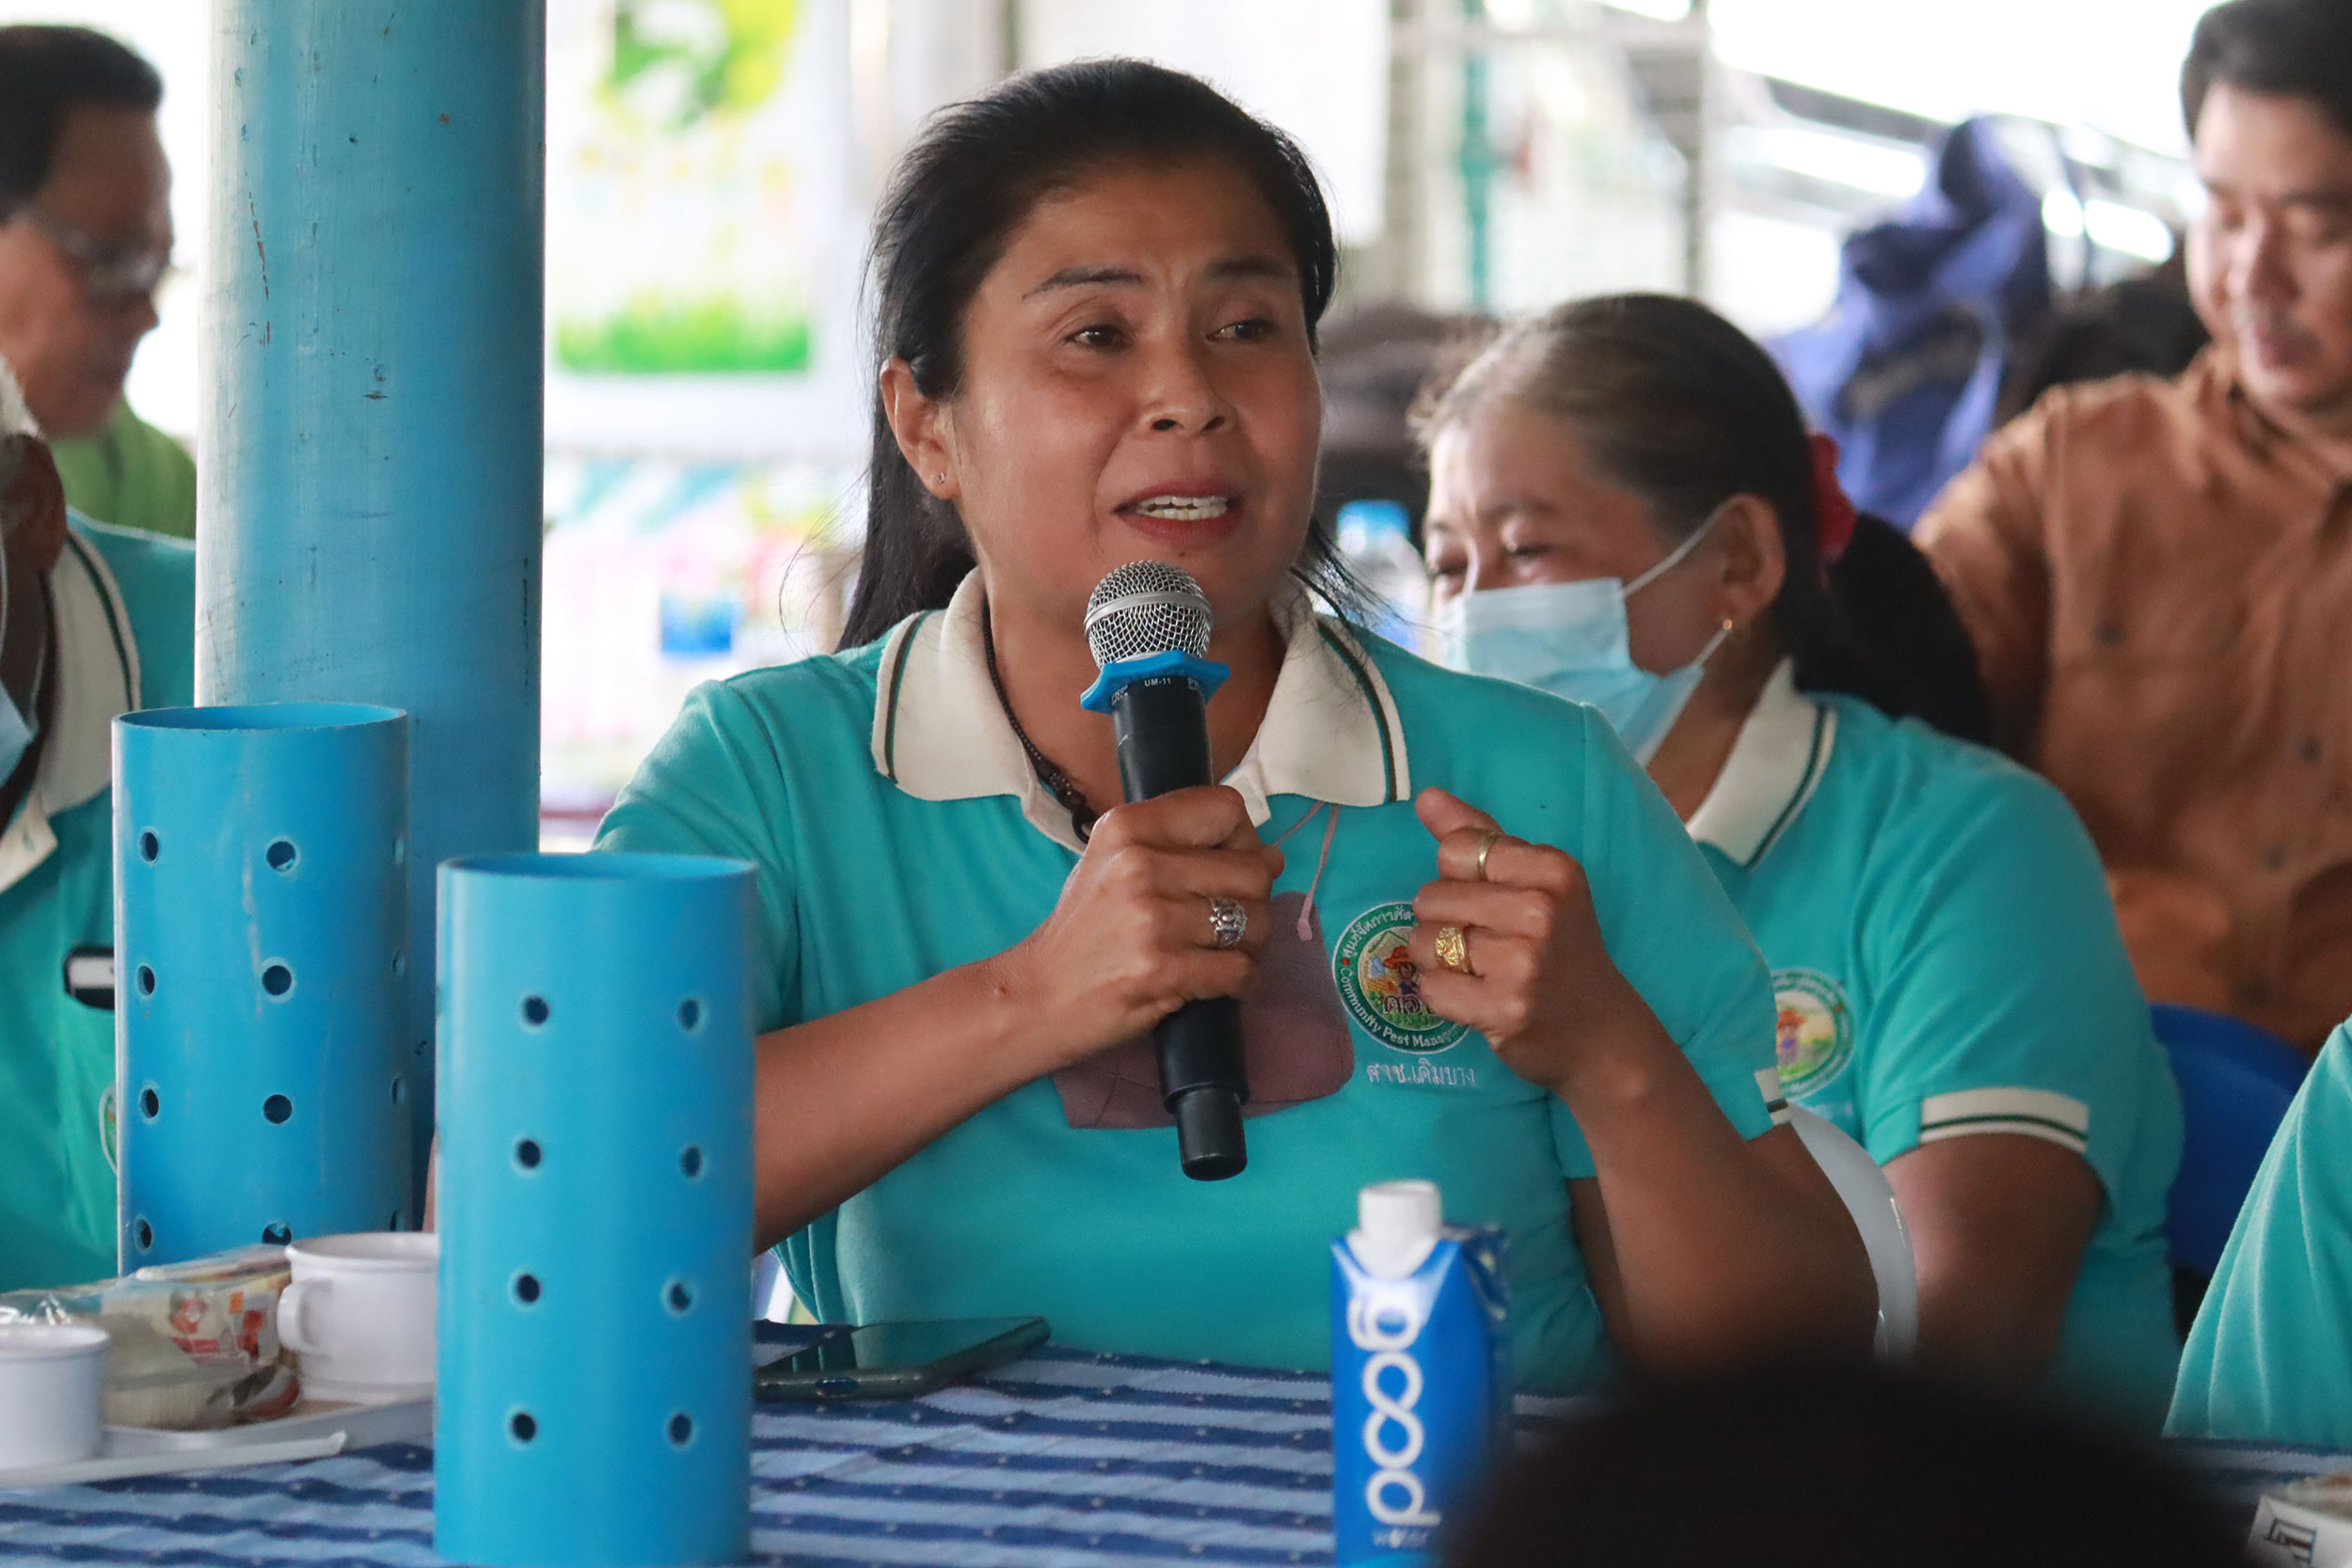 Lampa Khampaeng, Thai Rice NAMA farmer member explains to TICA executives how farmers can adapt a plastic pipe to measure water level at rice paddies. (คุณลำภา คำแผง เกษตรกรสตรี สมาชิกโครงการไทย ไรซ์ นามา)